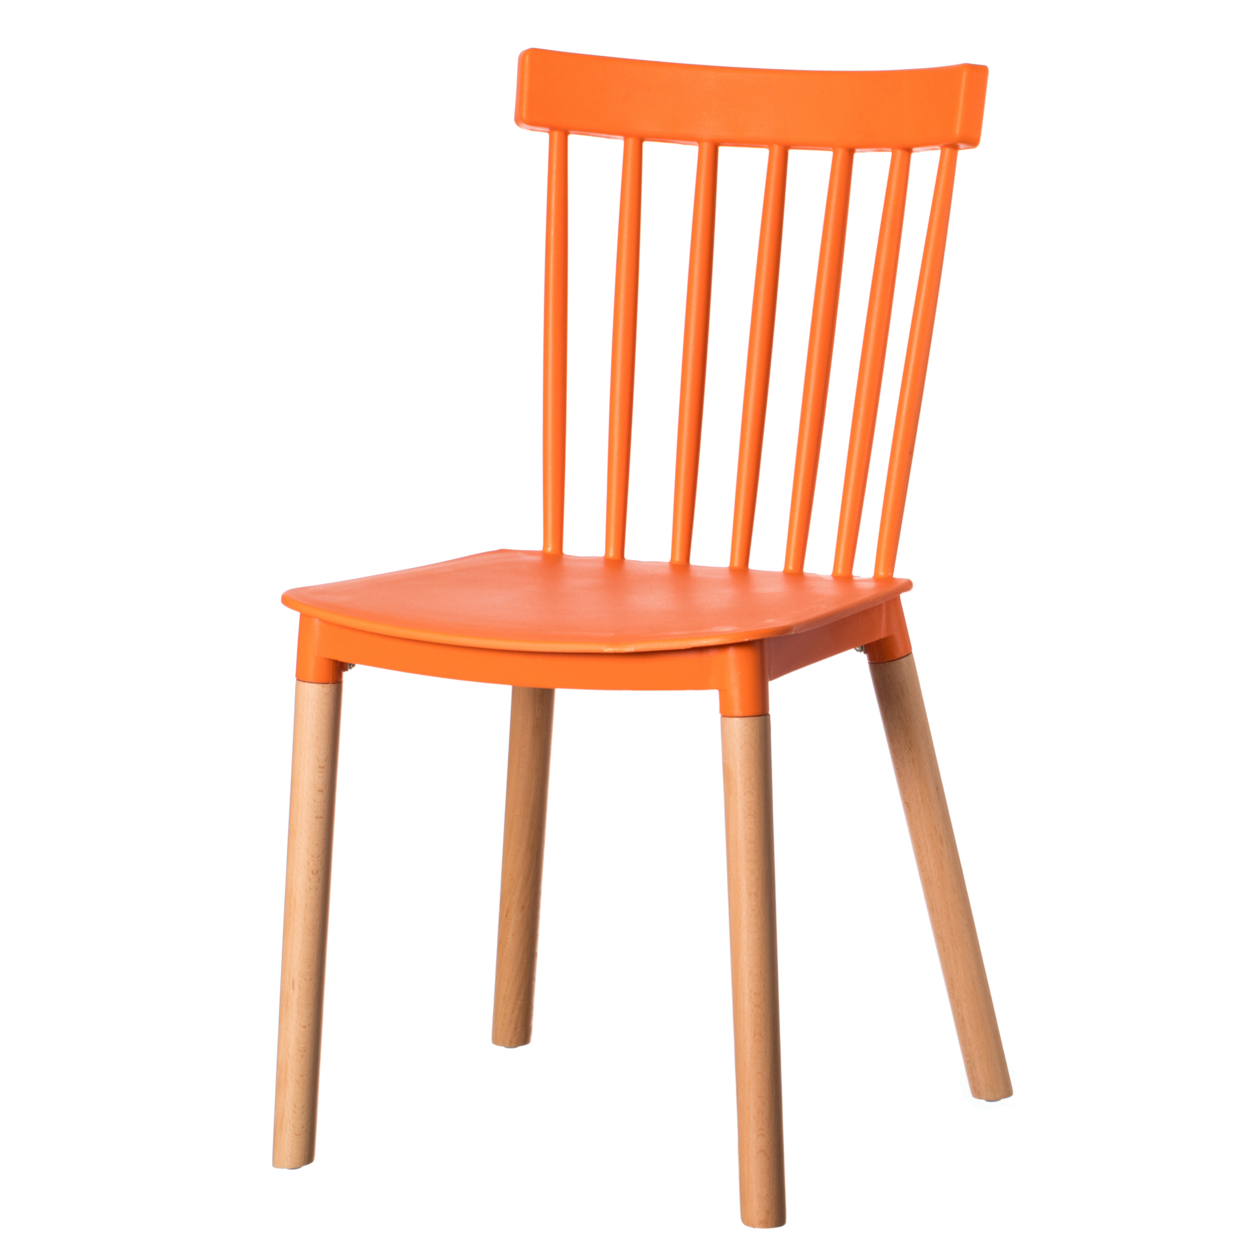 Modern Plastic Dining Chair Windsor Design With Beech Wood Legs - Set Of 2 Orange